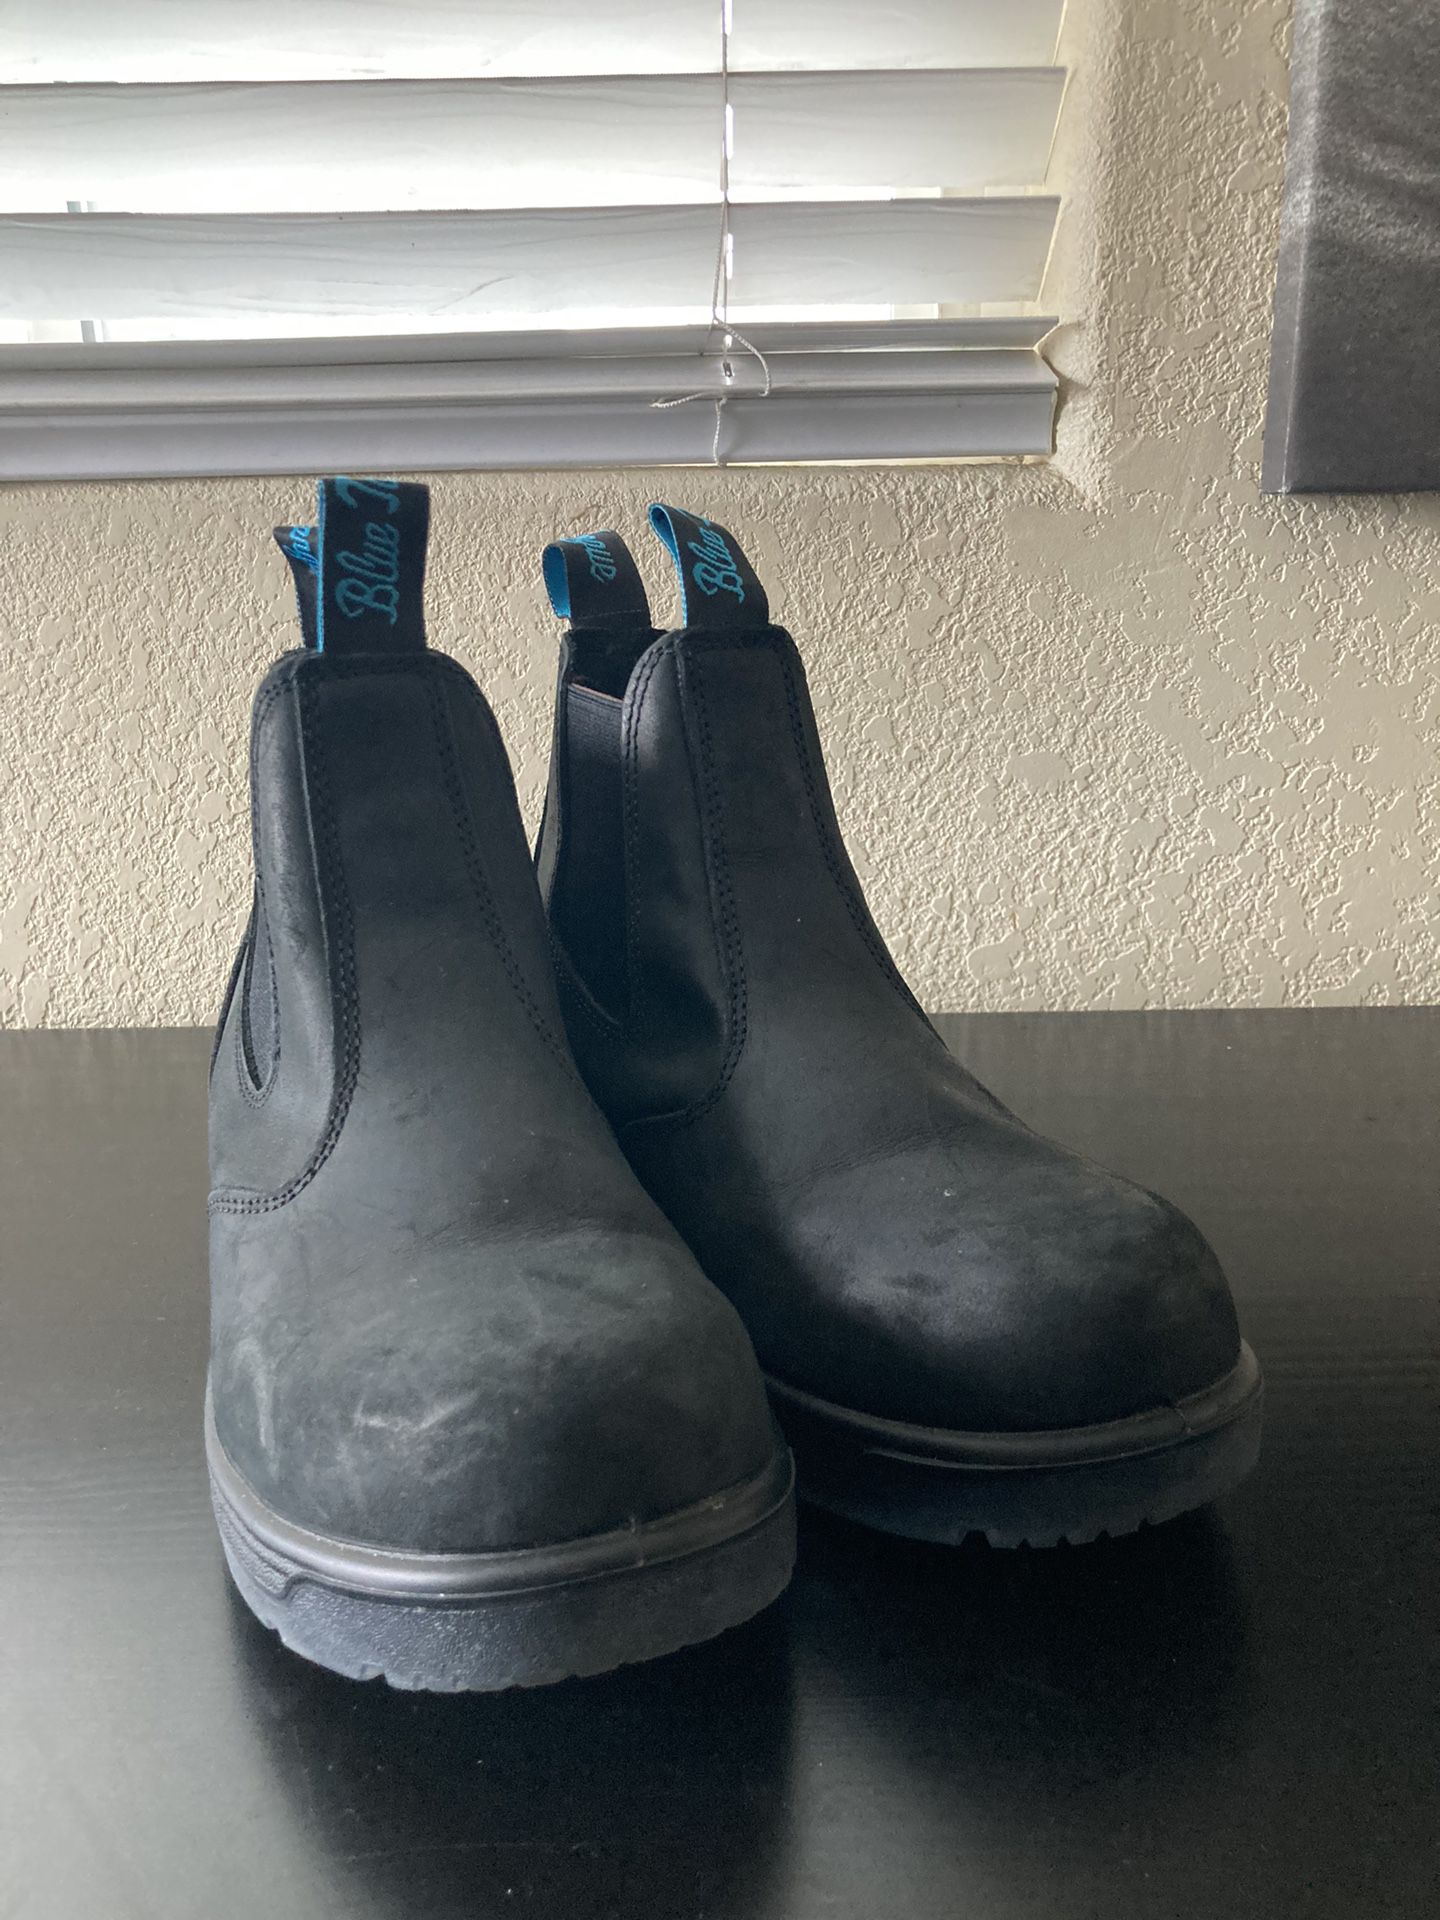 Blue Tongue Steel Toe Boots!